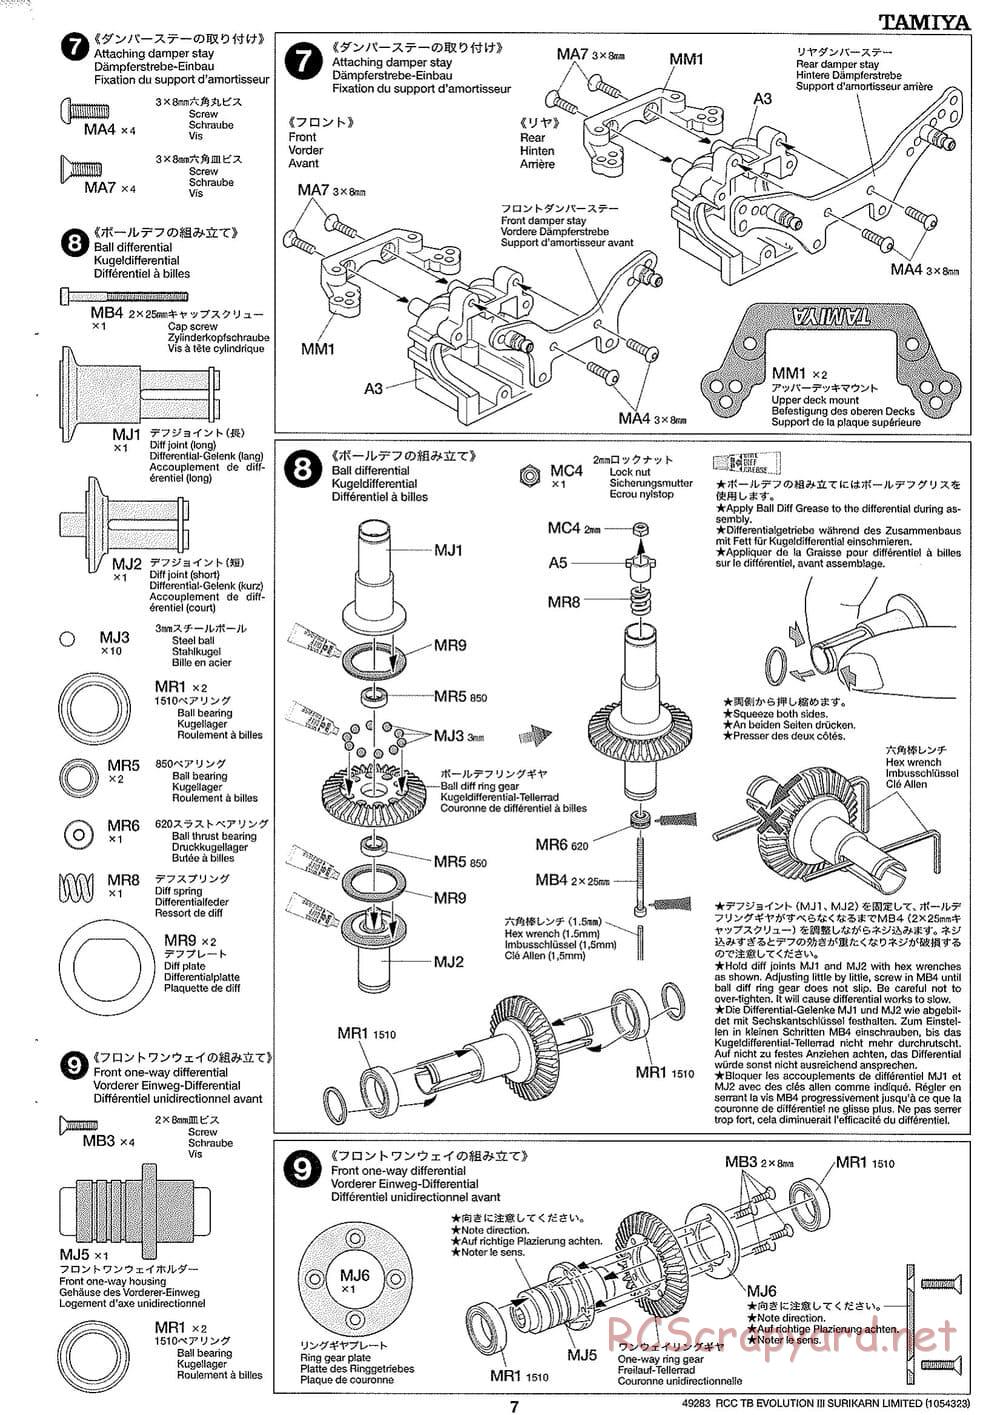 Tamiya - TB Evolution III Surikarn Limited Chassis - Manual - Page 7